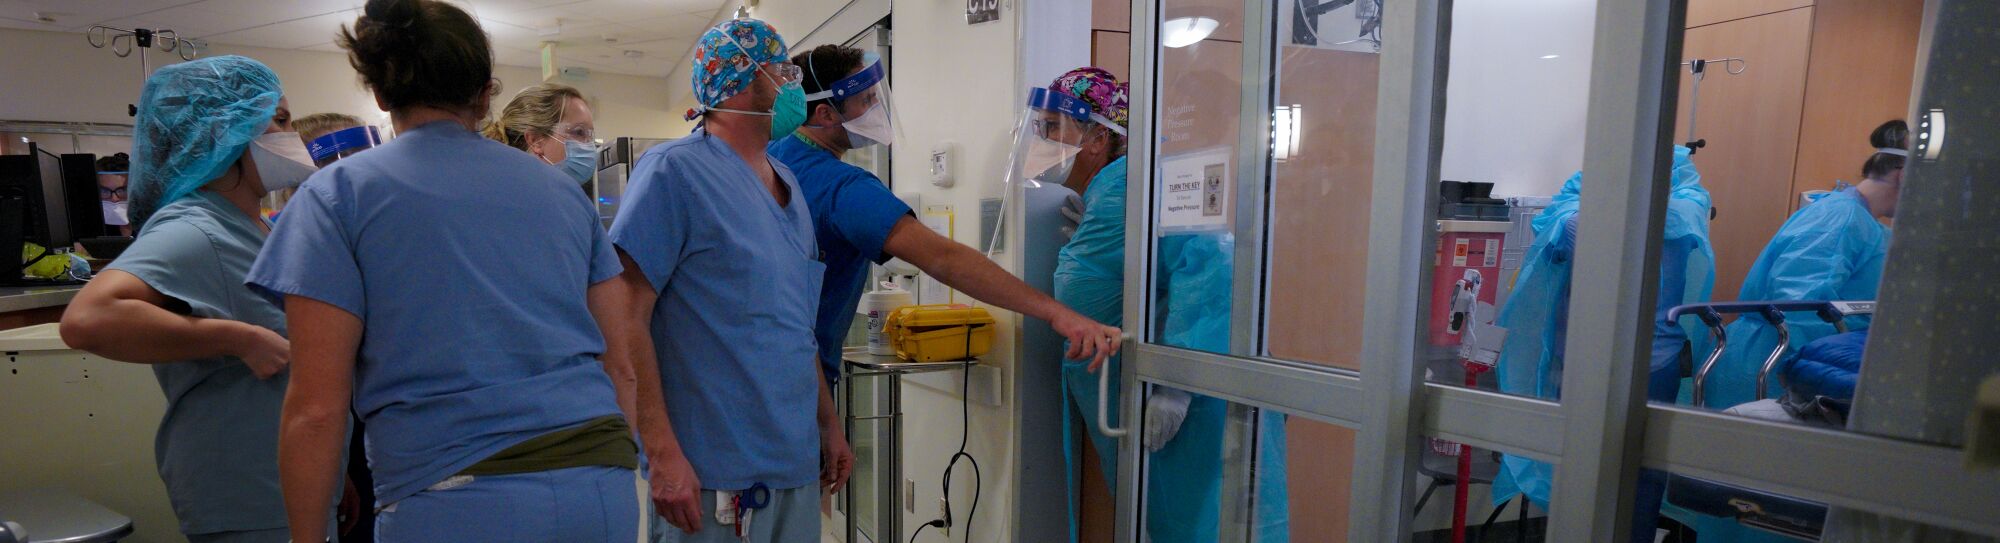 Nurses stand to assist doctors and nurses inside the negative pressure room.